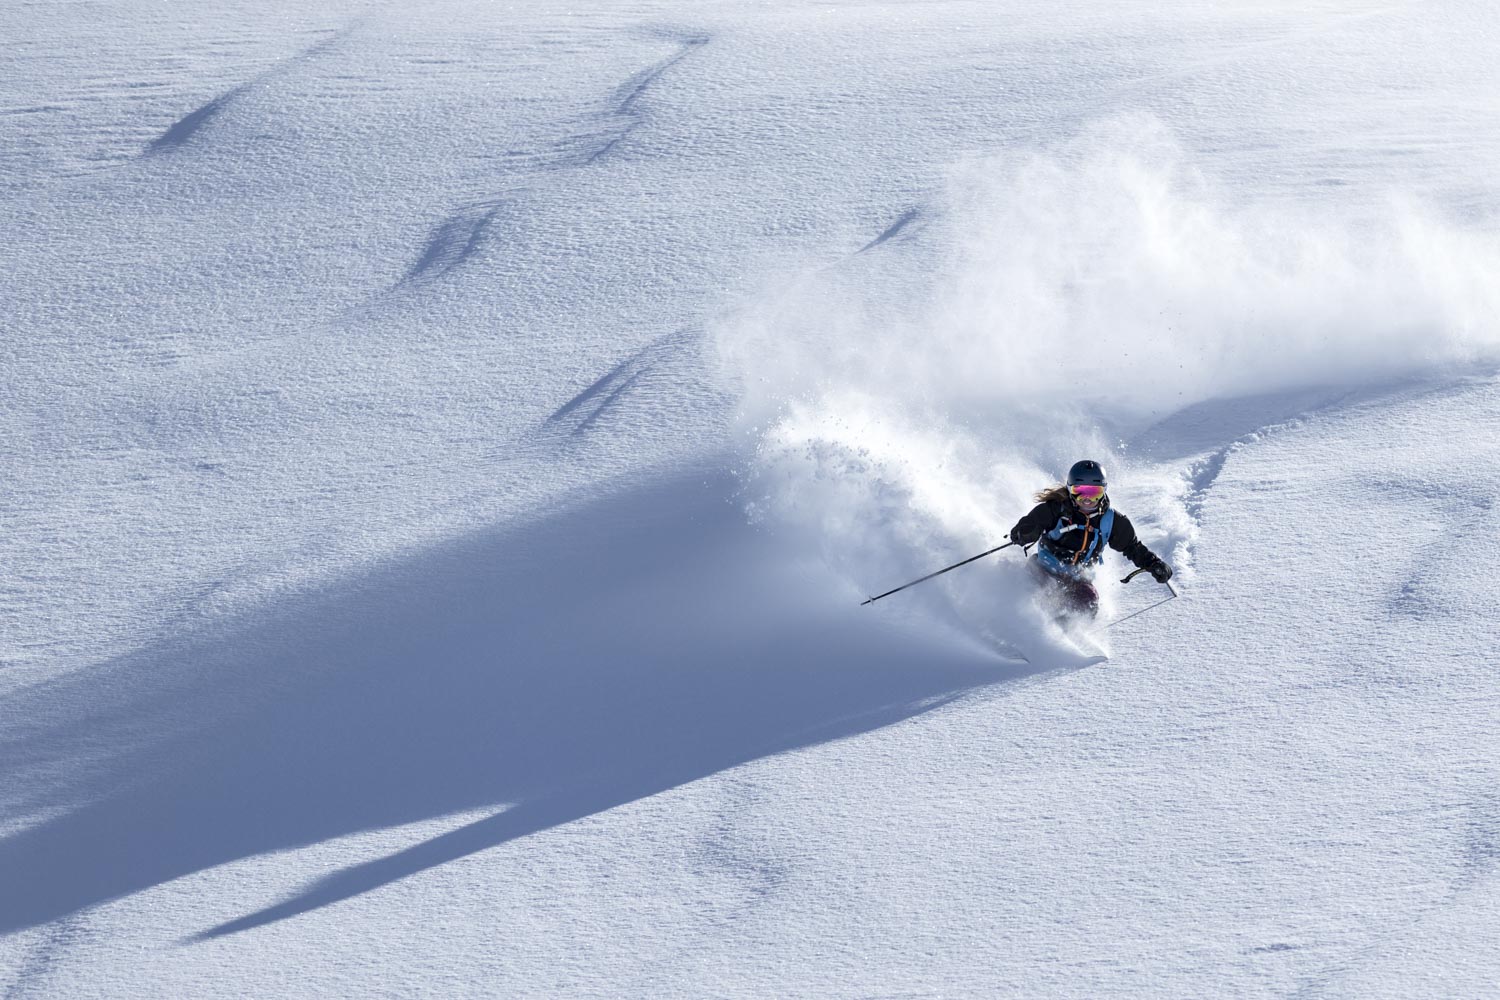 Sungod - Masque de Ski - Virage en Poudreuse - Ski - Hors Piste - Val d'IsÃ¨re - Frankie Pioli